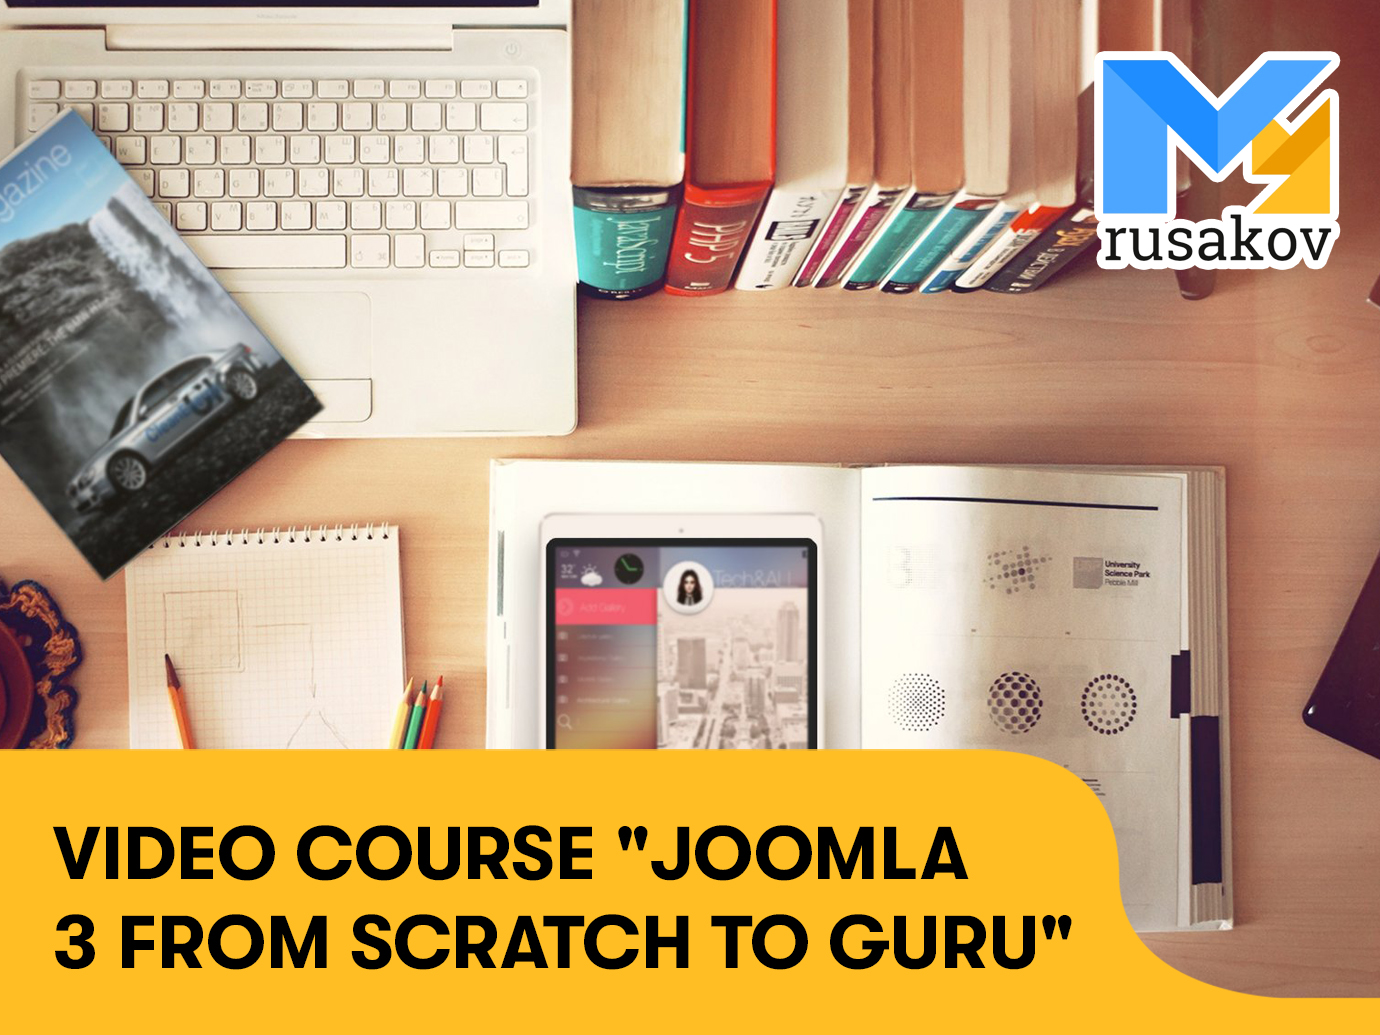 Video course “Joomla 3 from Scratch to Guru“